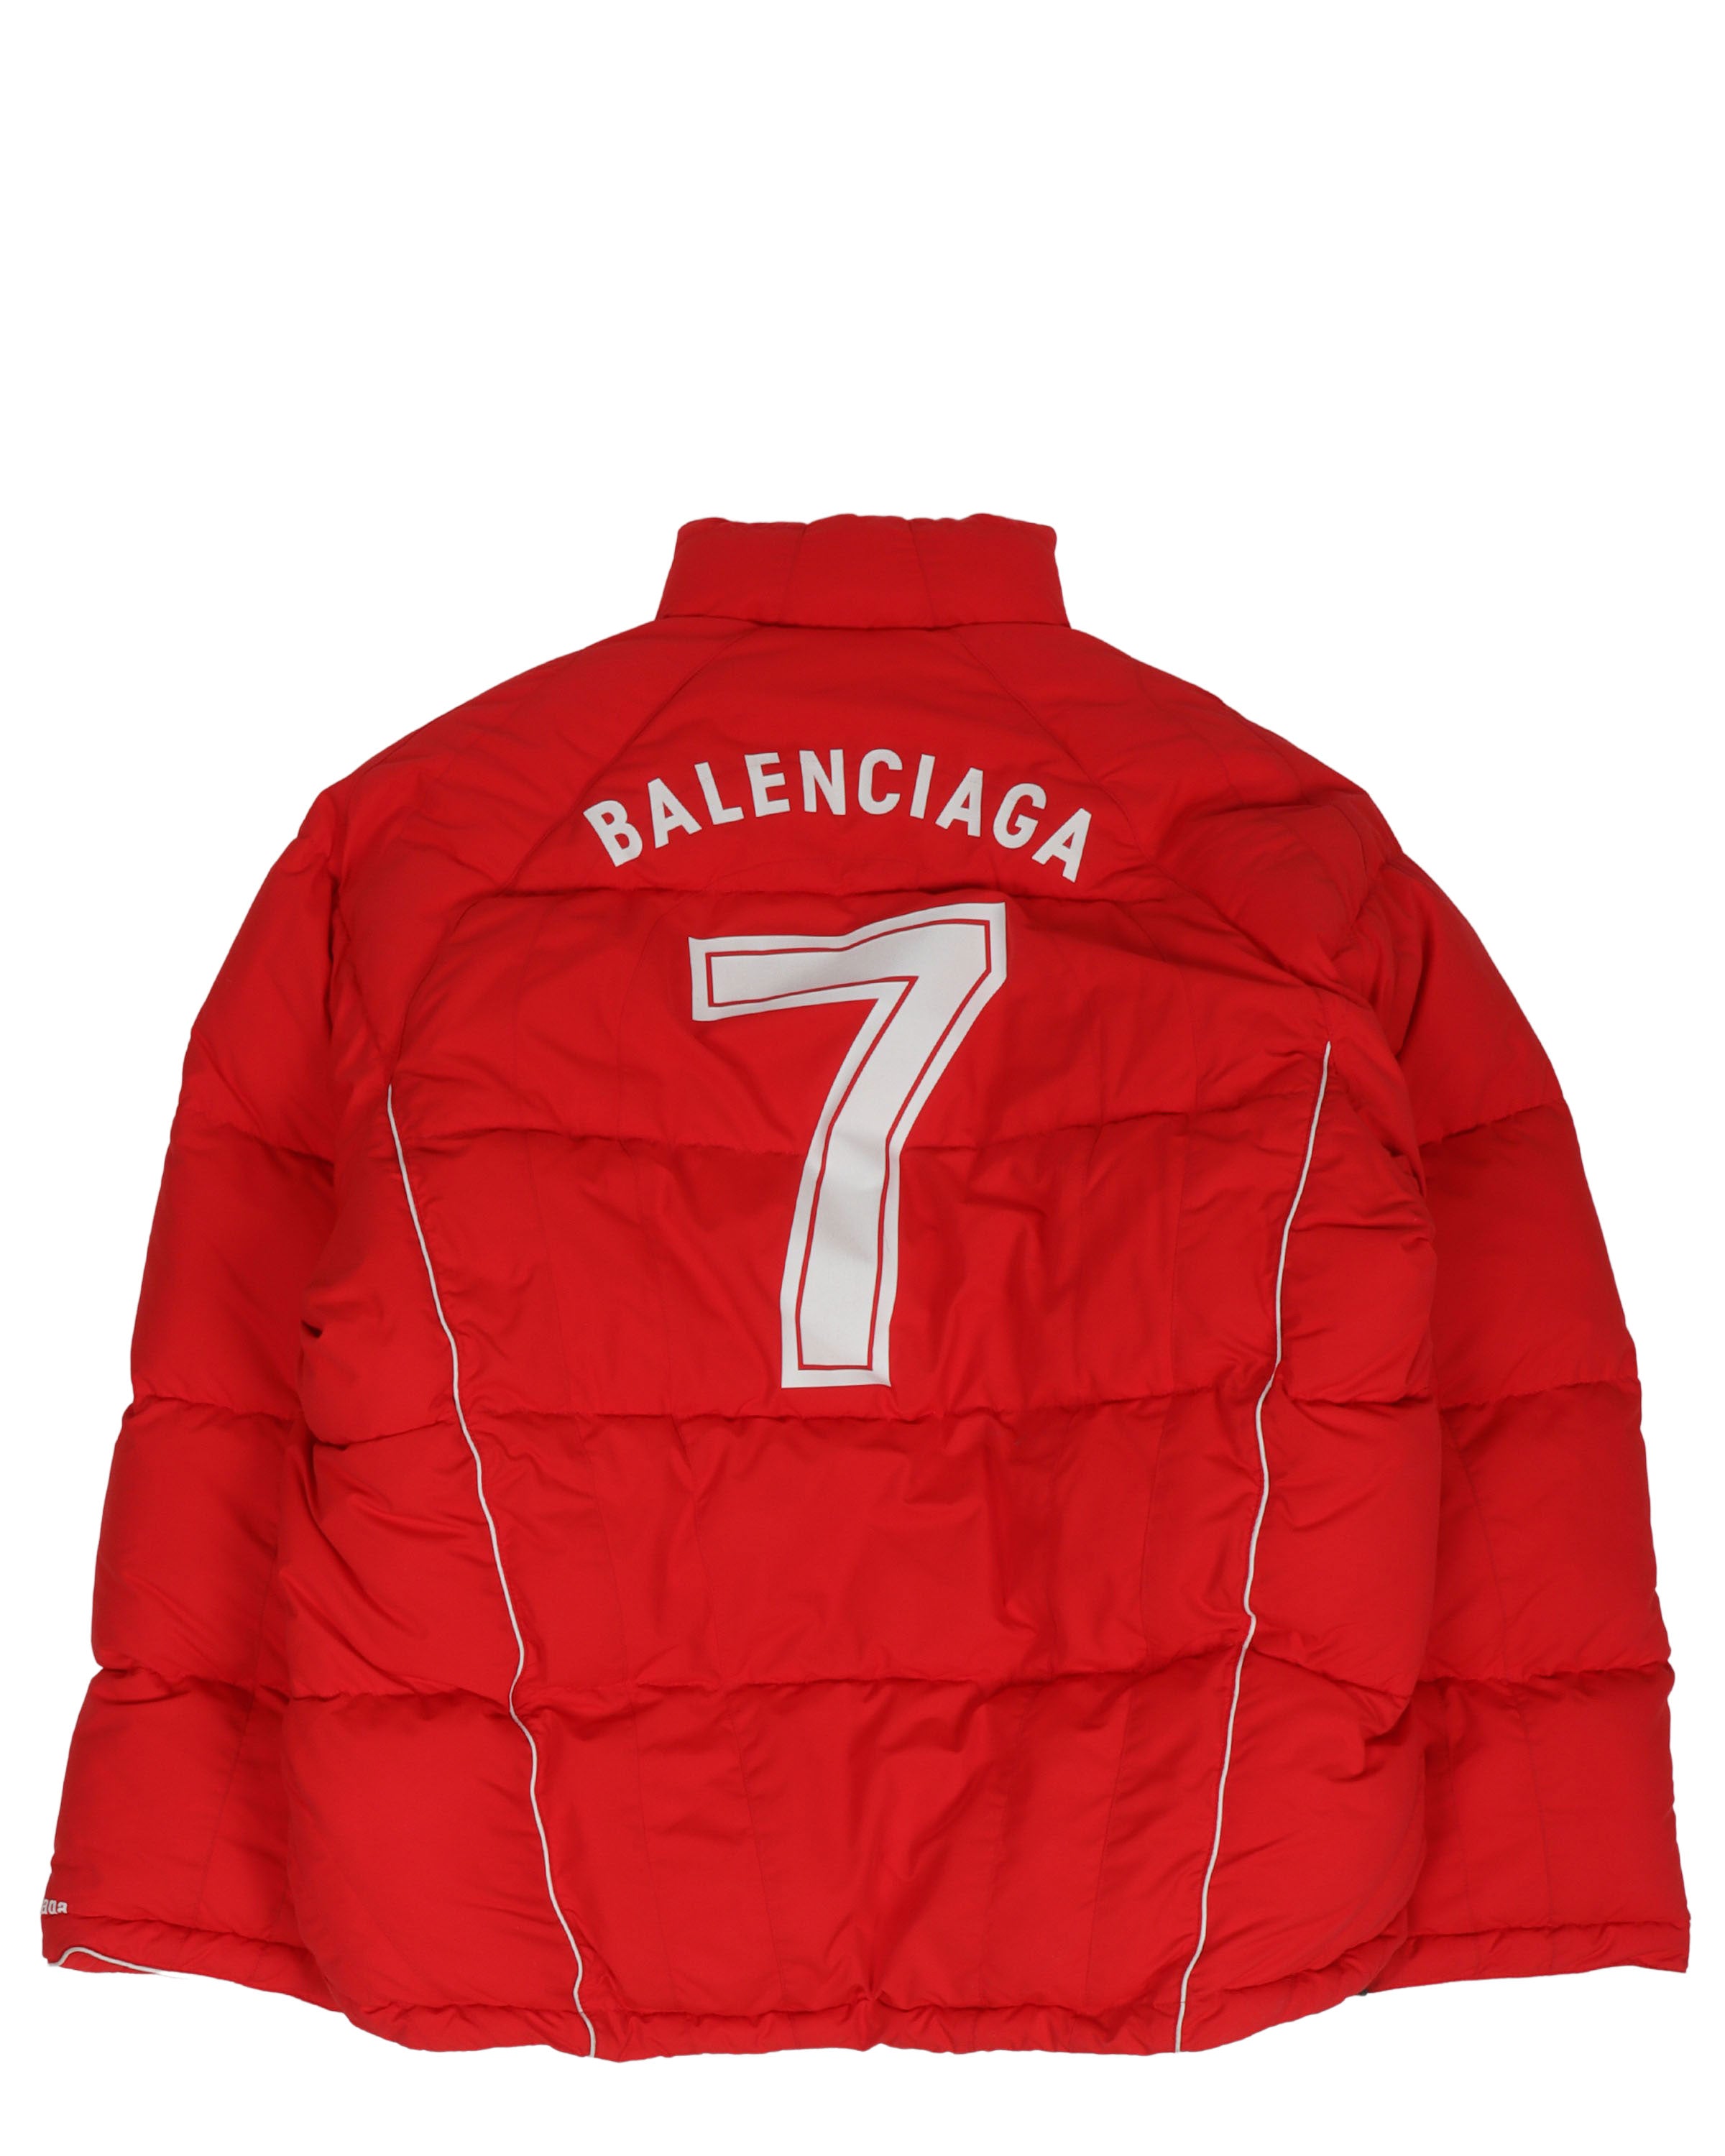 Balenciaga's Puffer Coat Is Football Gone Luxe